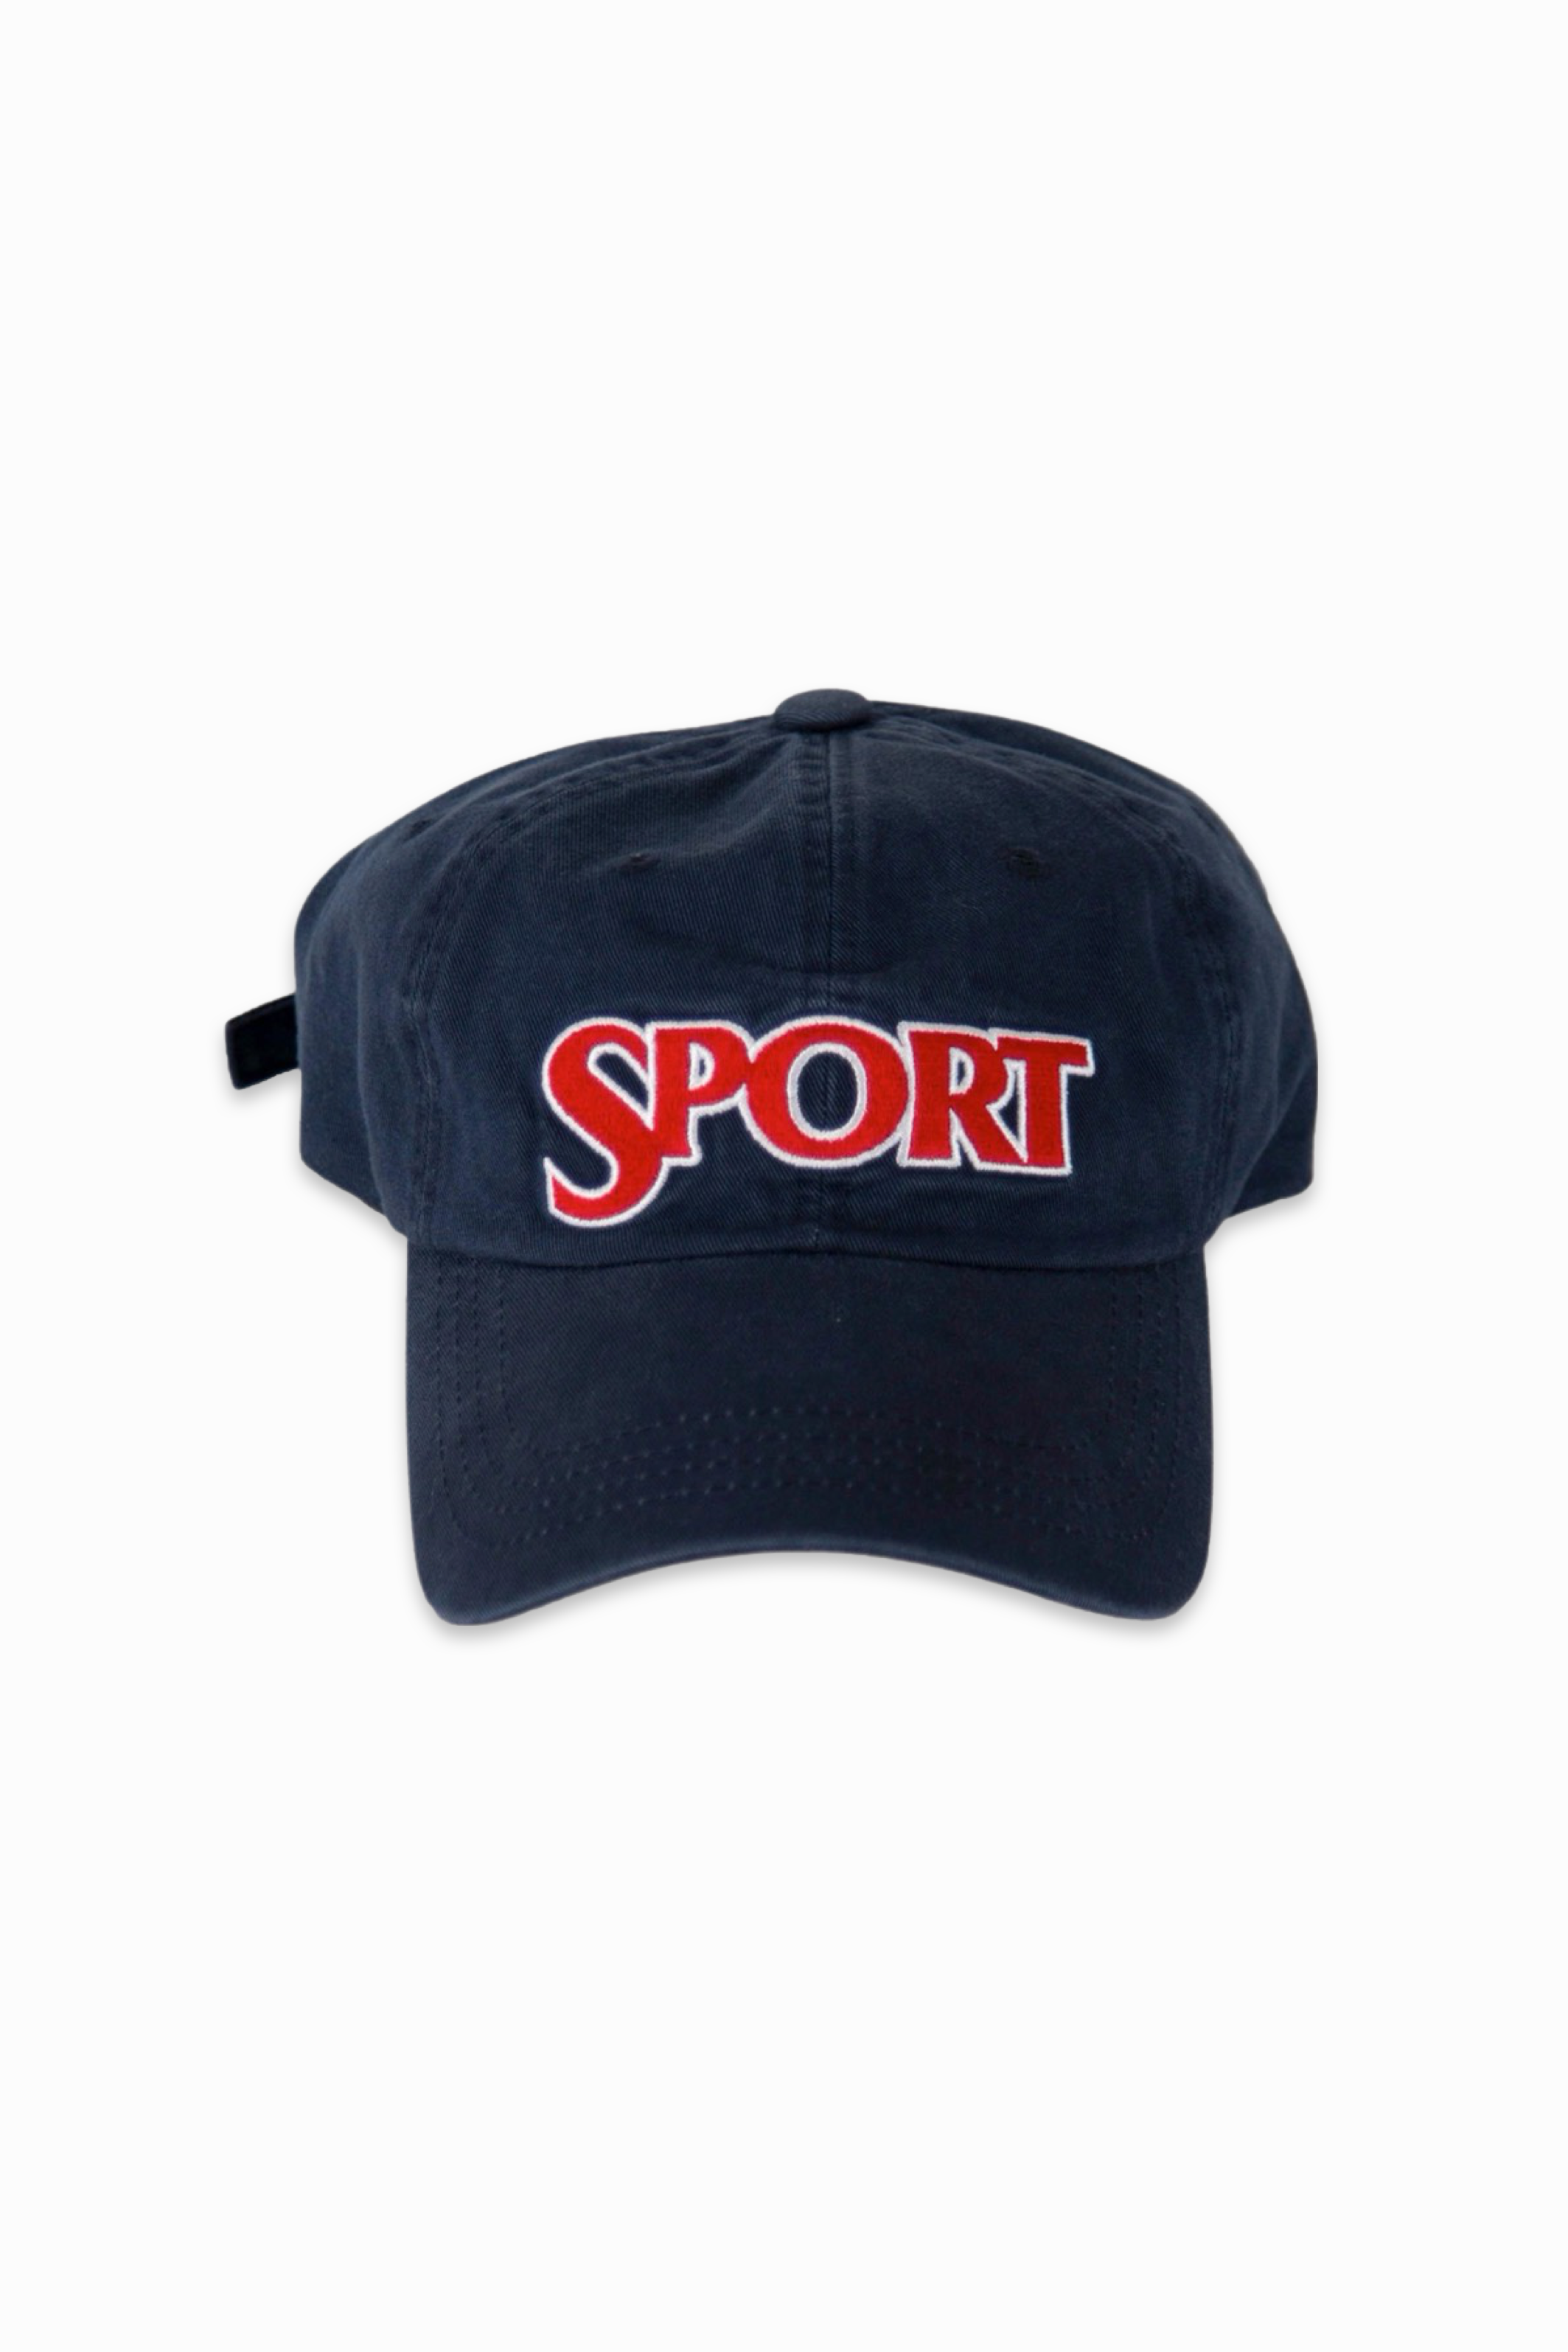 SPORT WASHING BALL CAP